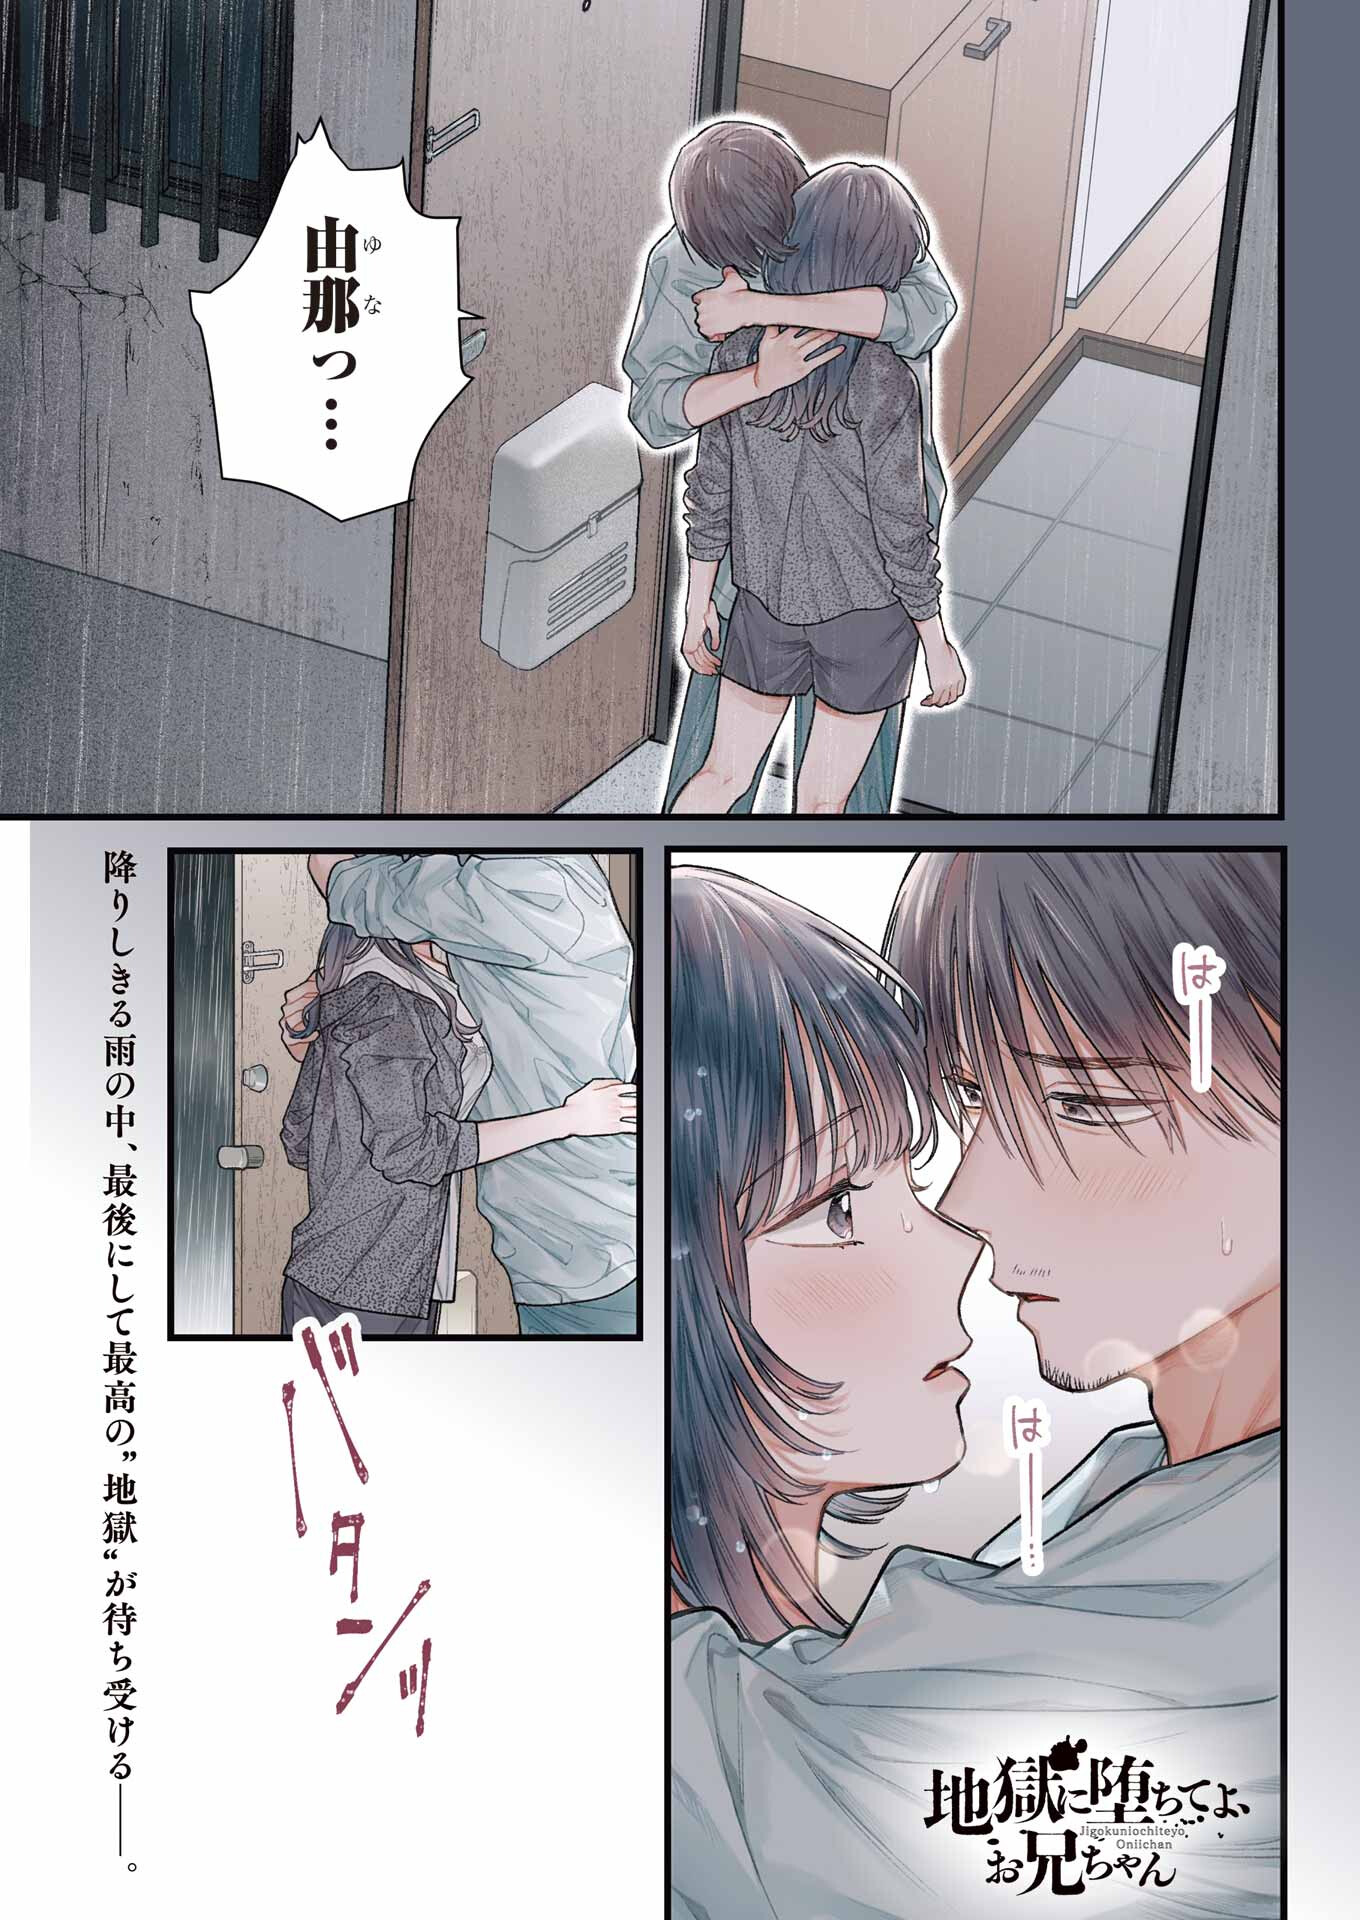 Jigoku ni Ochite yo, Onii-chan - Chapter 30 - Page 1